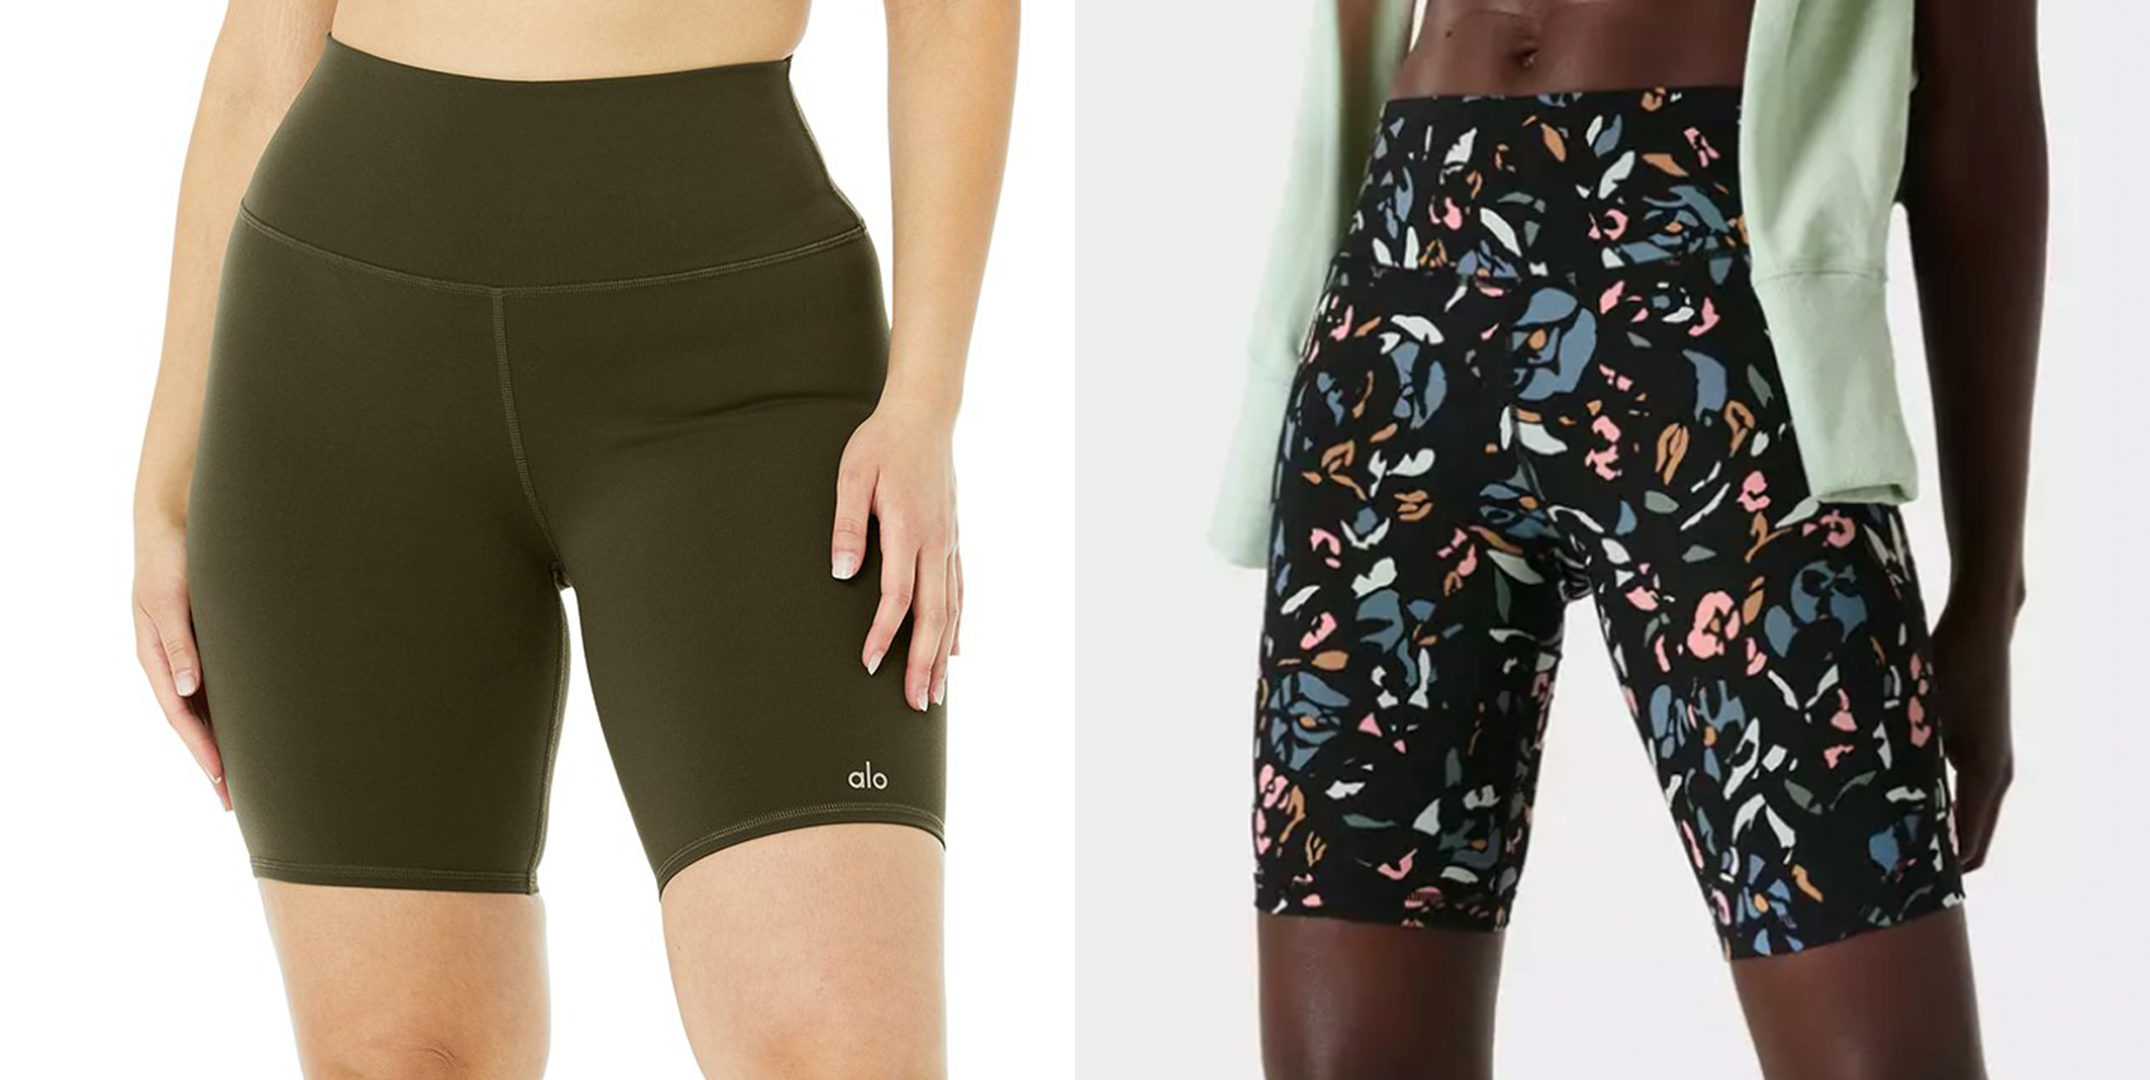 Sport Shorts For Women Women Basic Slip Bike Shorts Compression